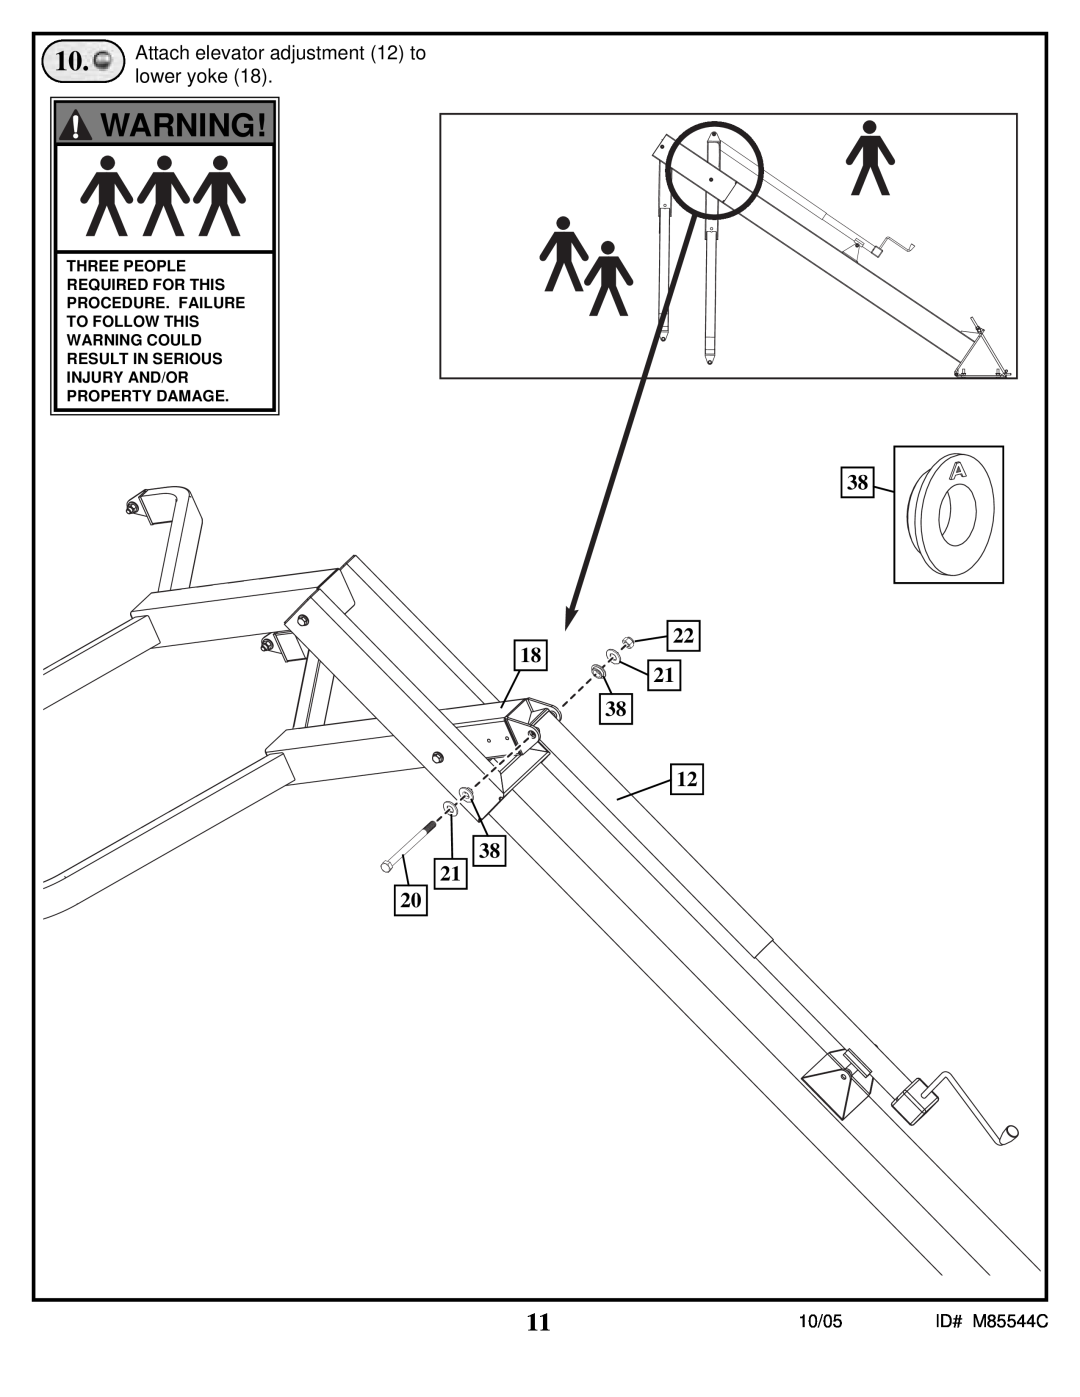 Spalding manual Attach elevator adjustment 12 to, lower yoke, 10/05, ID# M85544C 